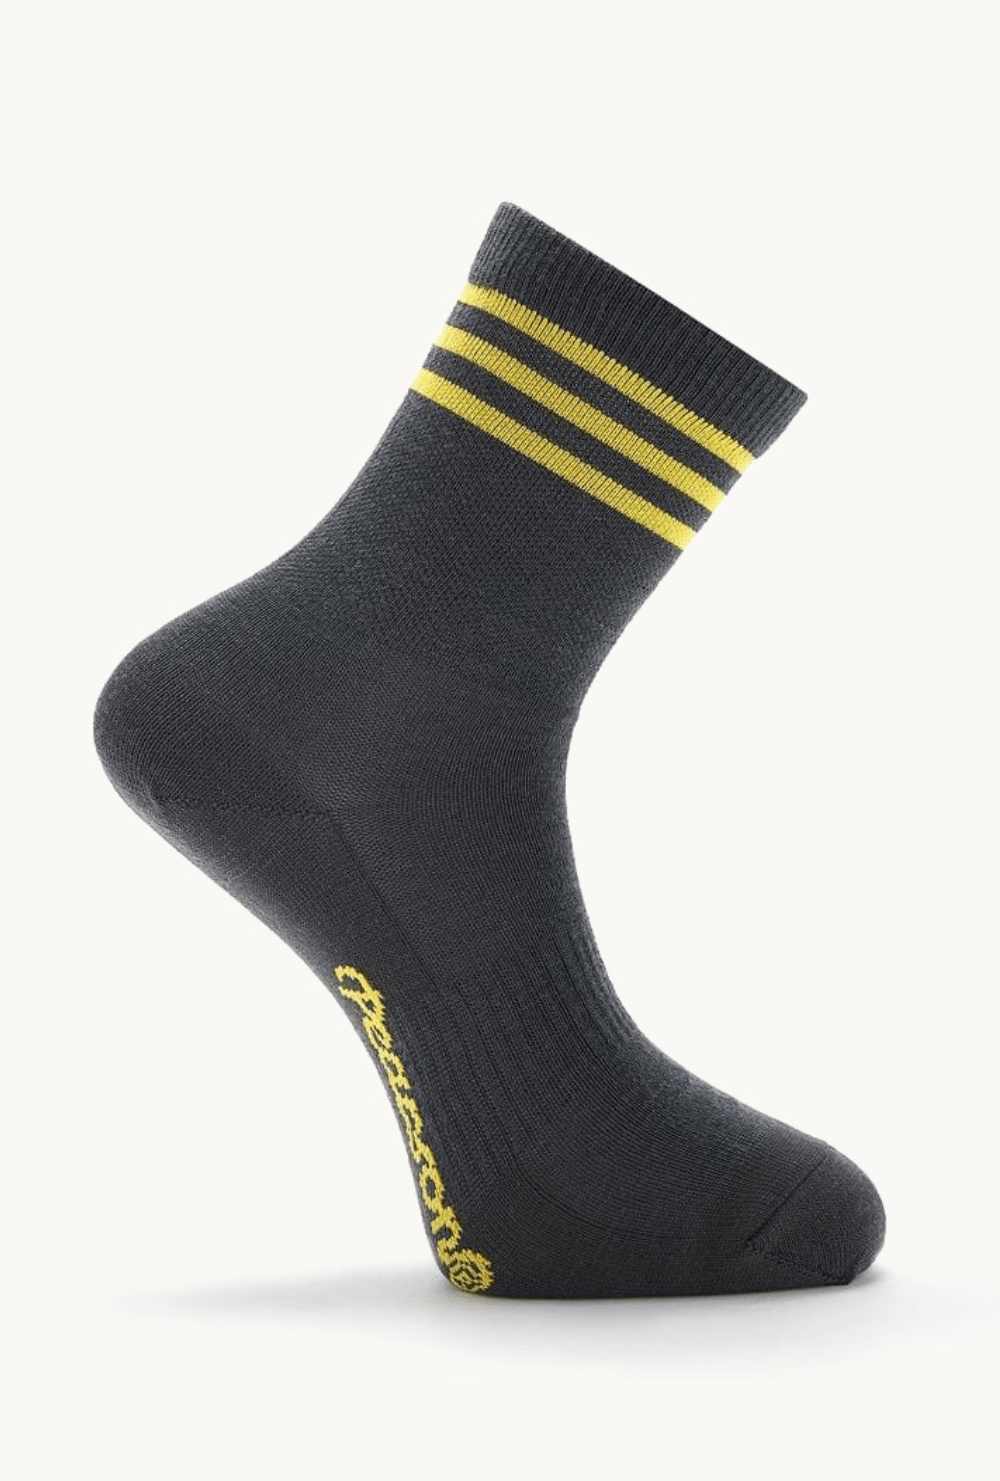 Pearson 1860  Reasons To Be Cheerful - Merino Socks  Large / X-large